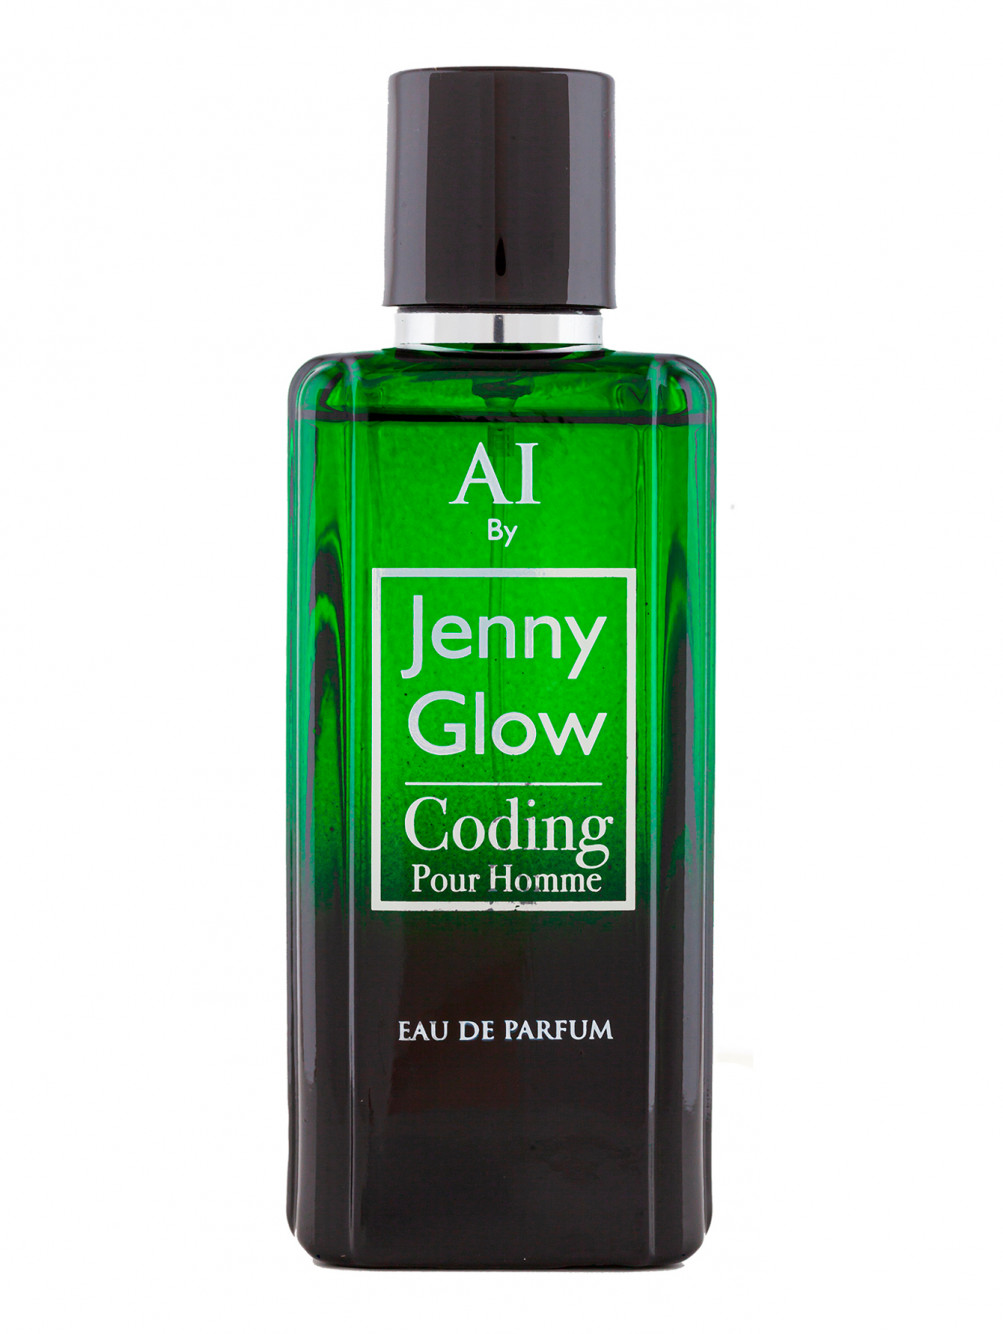 Парфюмерная вода Jenny Glow Coding Pour Homme, 50 мл - Общий вид